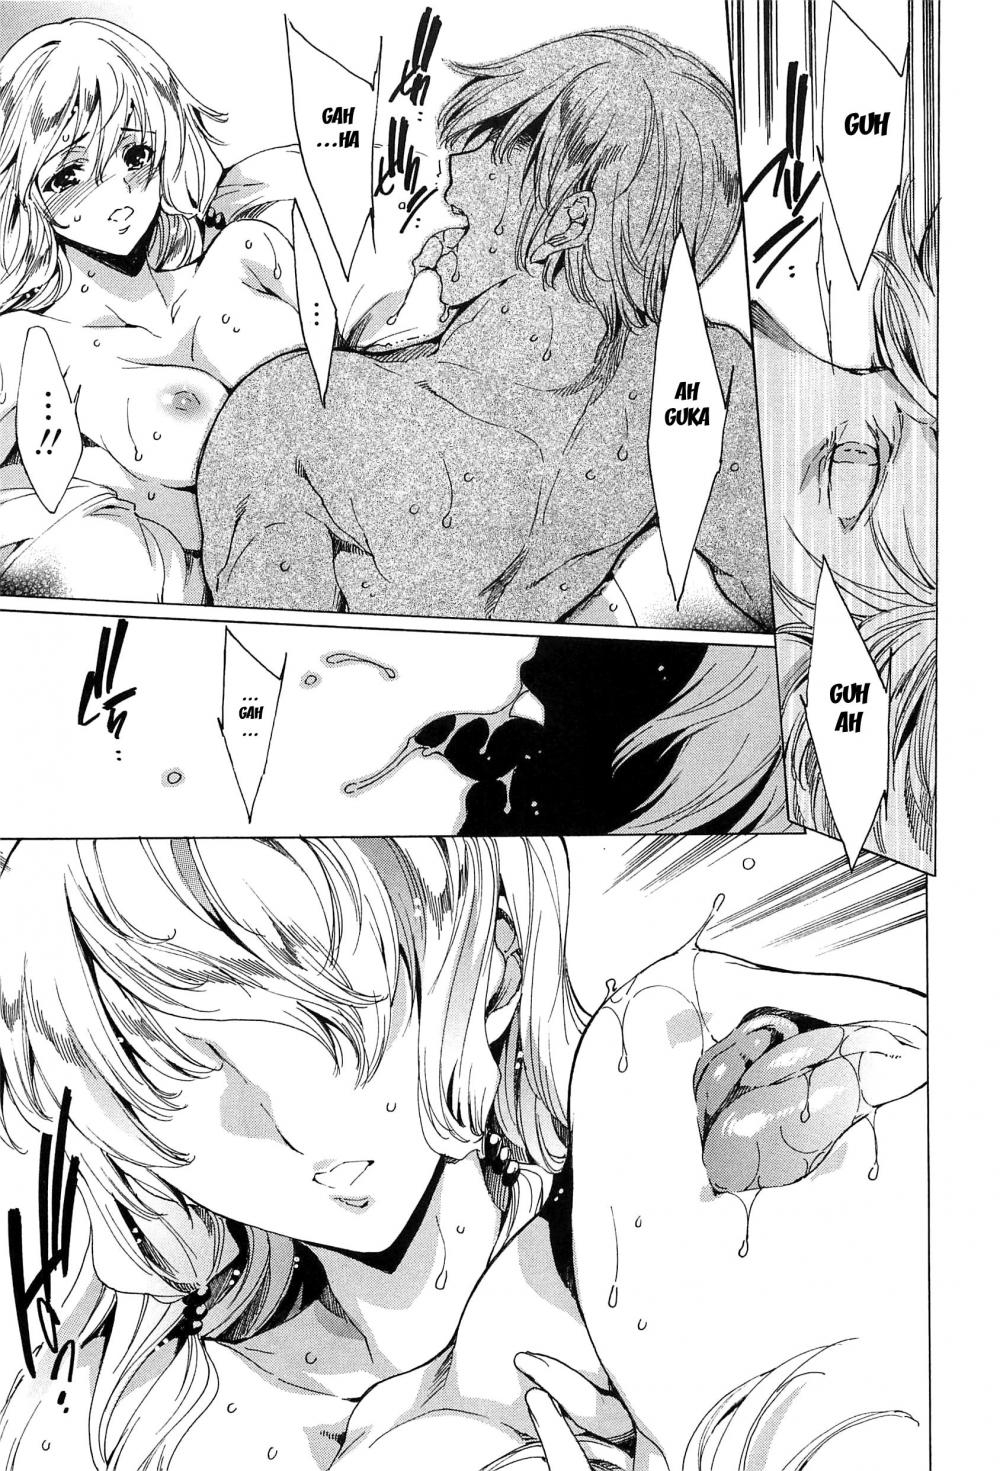 Hentai Manga Comic-Chains of Lust - NTR Girlfriend-Chapter 6-9